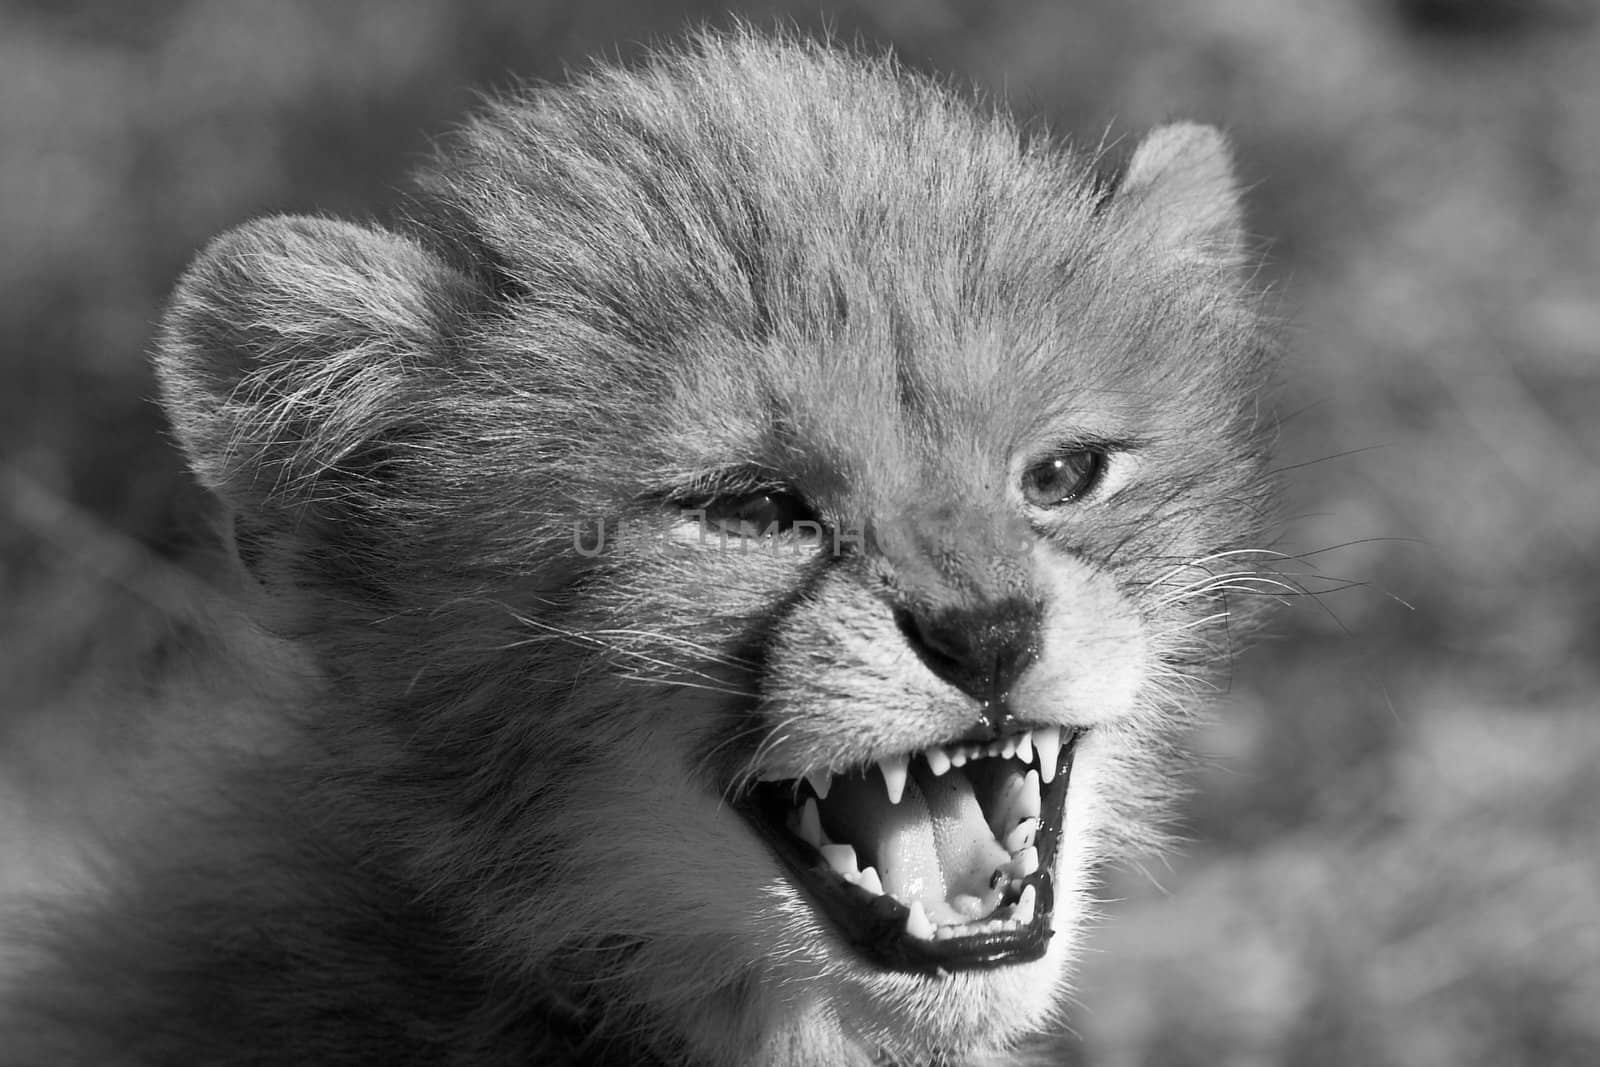 Angry cub by nightowlza